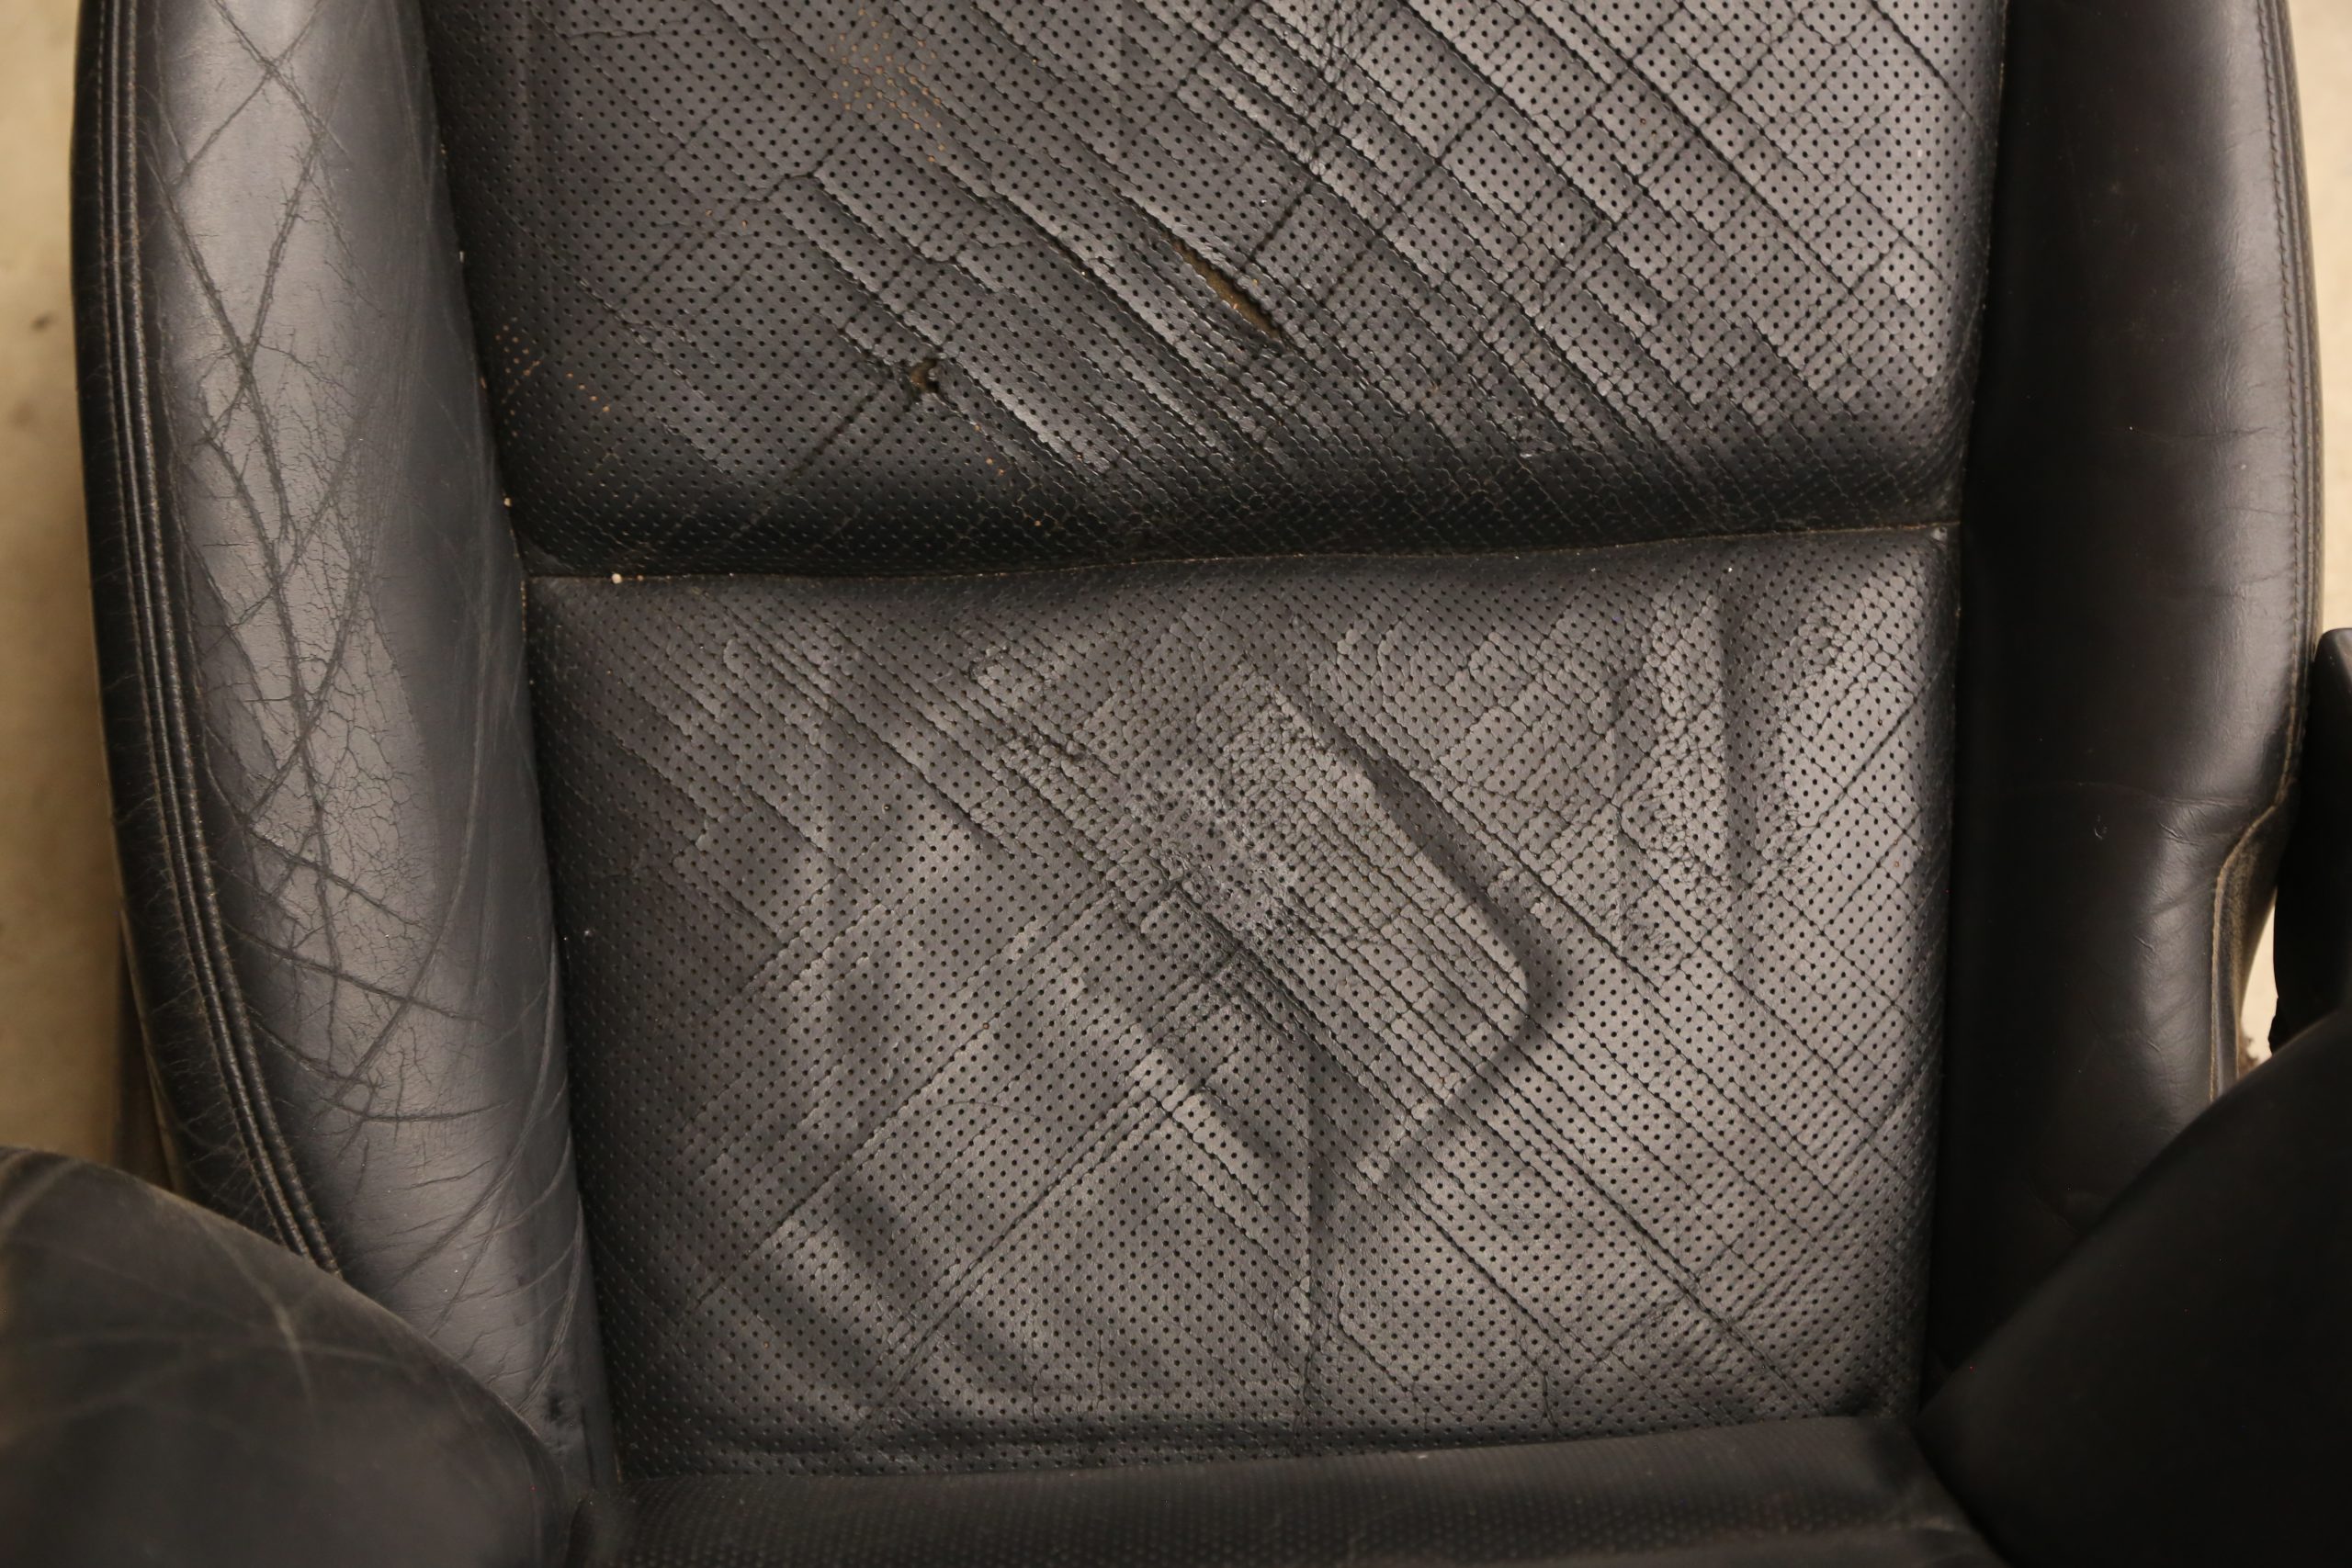 DIY Leather& Vinyl Repair Kit for Repair Any Cracks on Leather